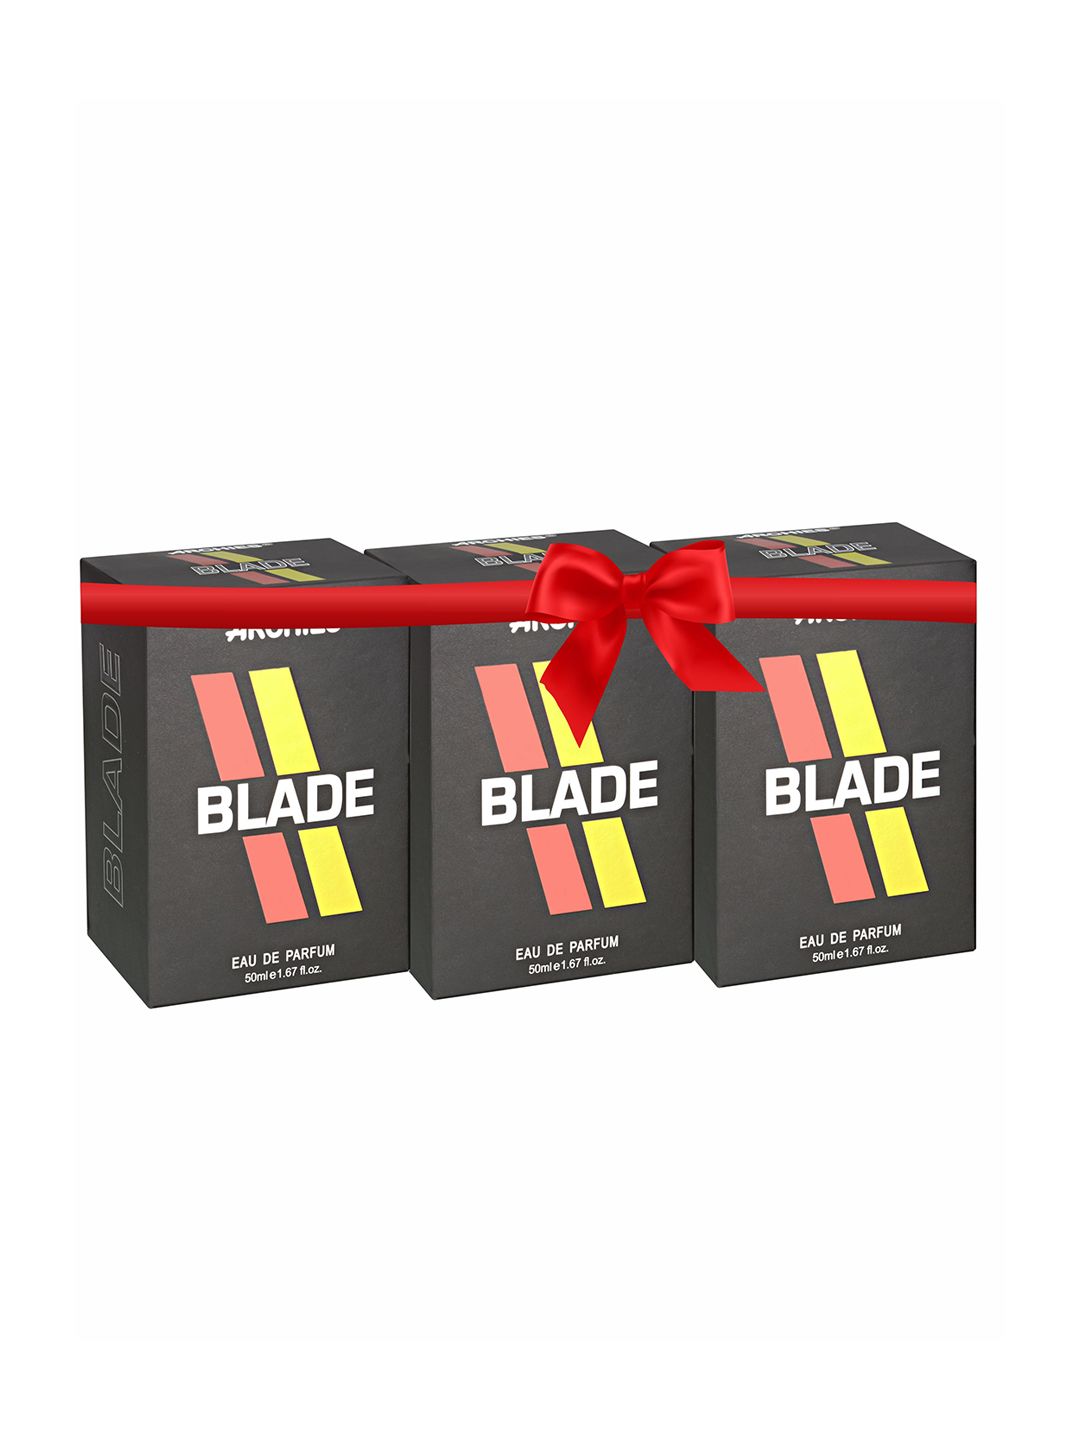 Archies Set of 3 Blade Eau de Parfum - 50ml each Price in India